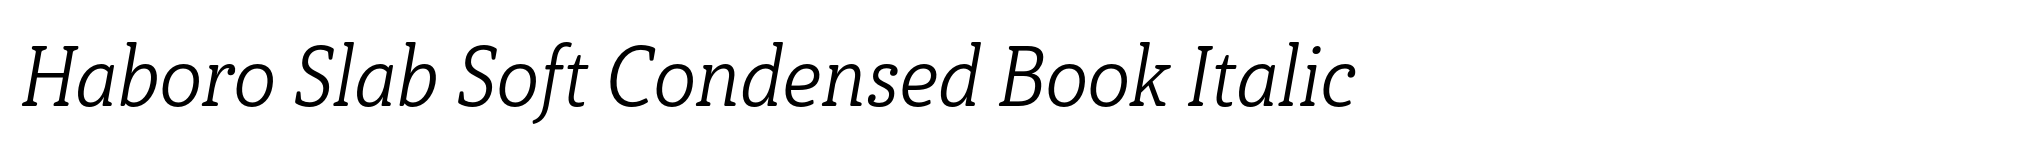 Haboro Slab Soft Condensed Book Italic image